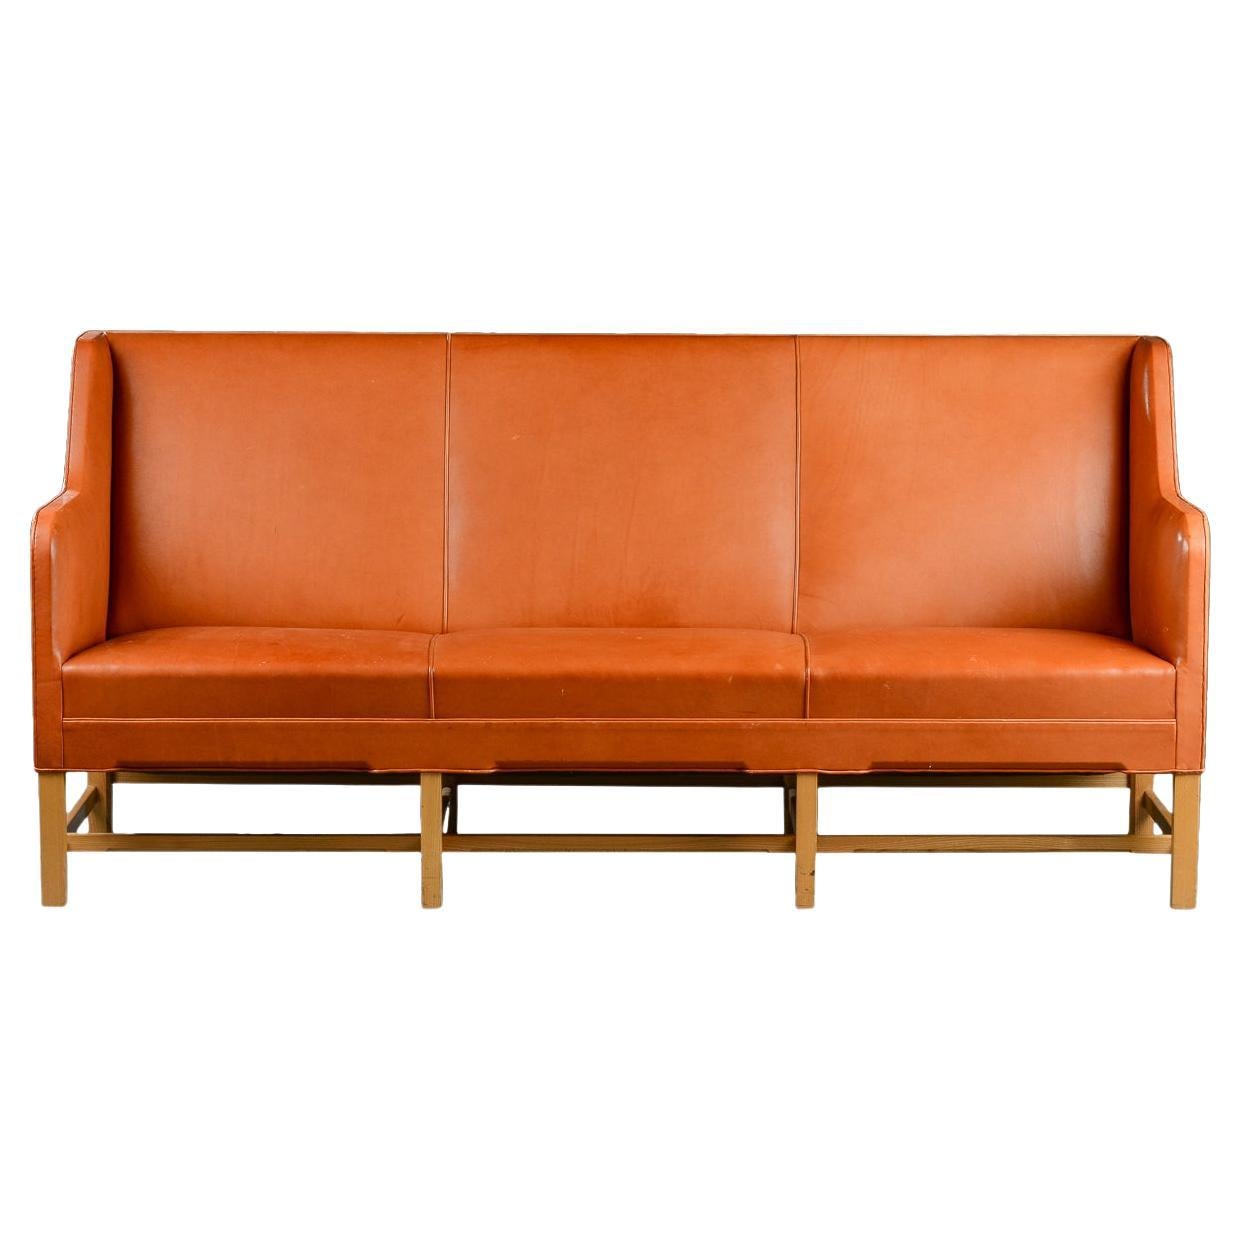 Kaare Klint Sofa Model 5011 Original Cognac Leather for Rud Rasmussen Denmark